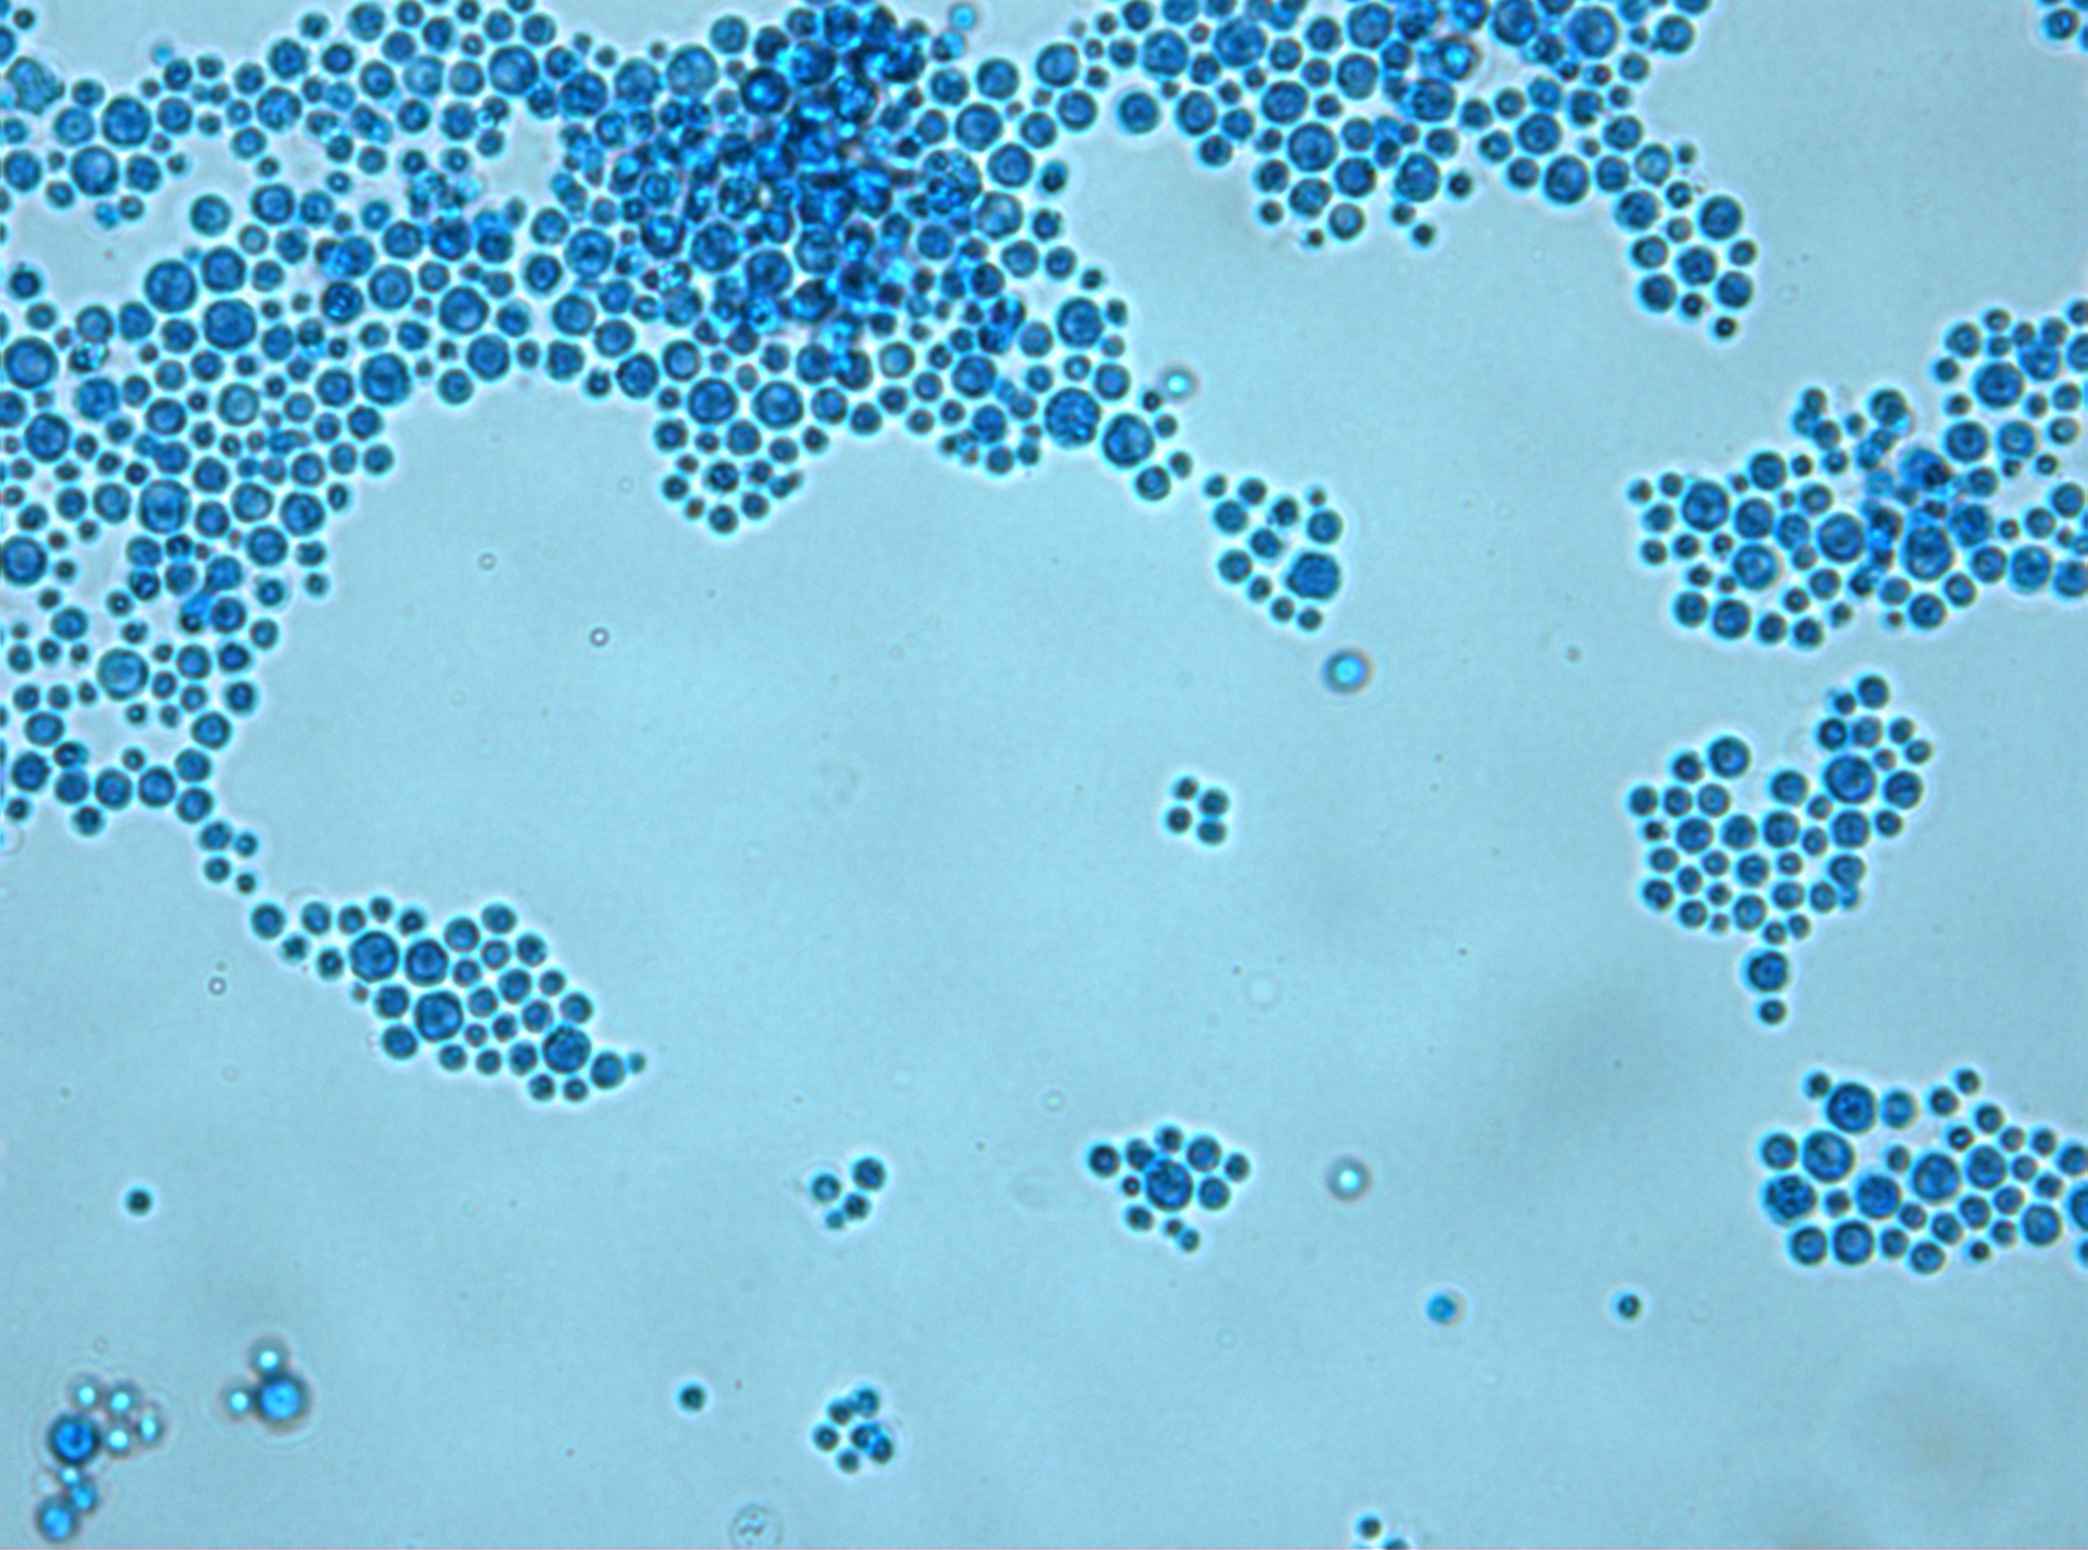 Молочница гриб. Candida albicans микроскопия. Дрожжей Saccharomyces cerevisiae микроскопия. Грибы кандида микроскопия. Дрожжеподобные грибы кандида.